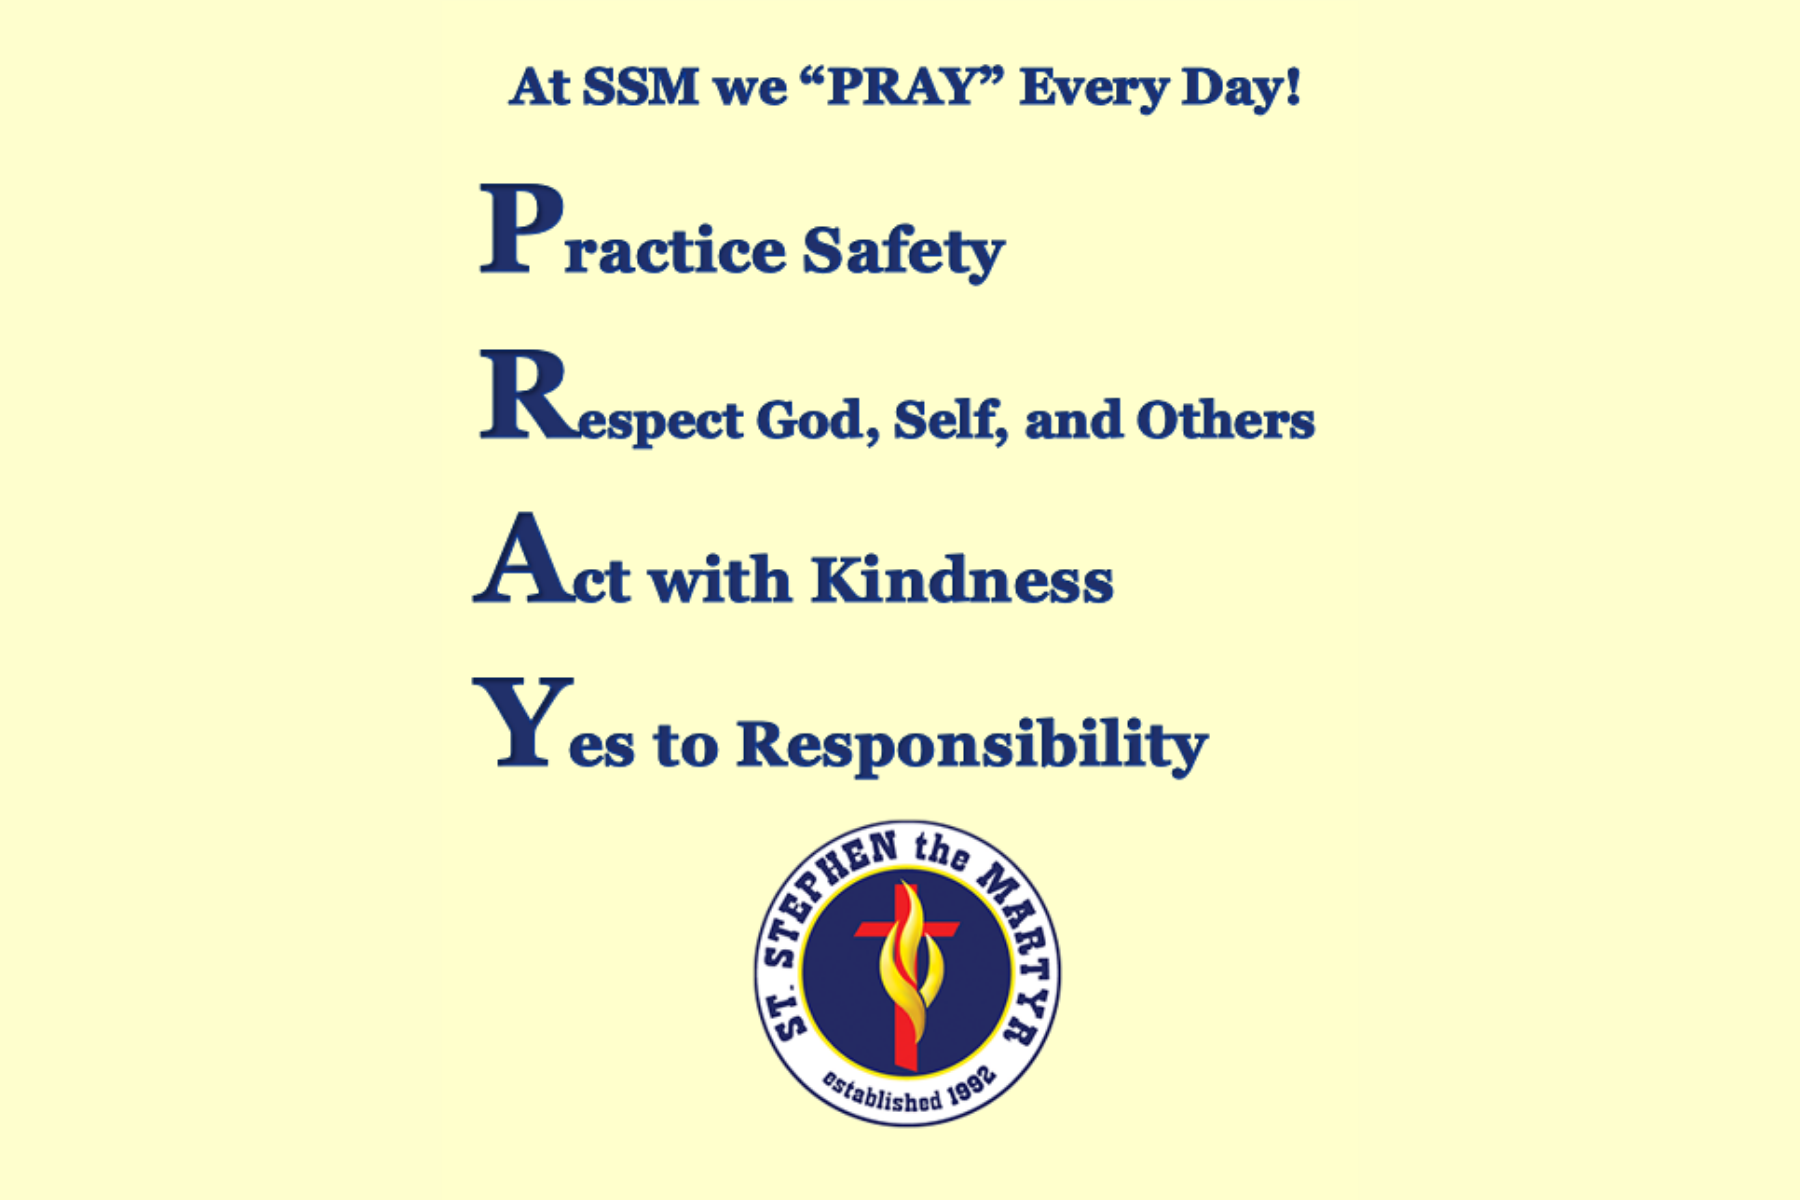 At SSM, We PRAY Every Day